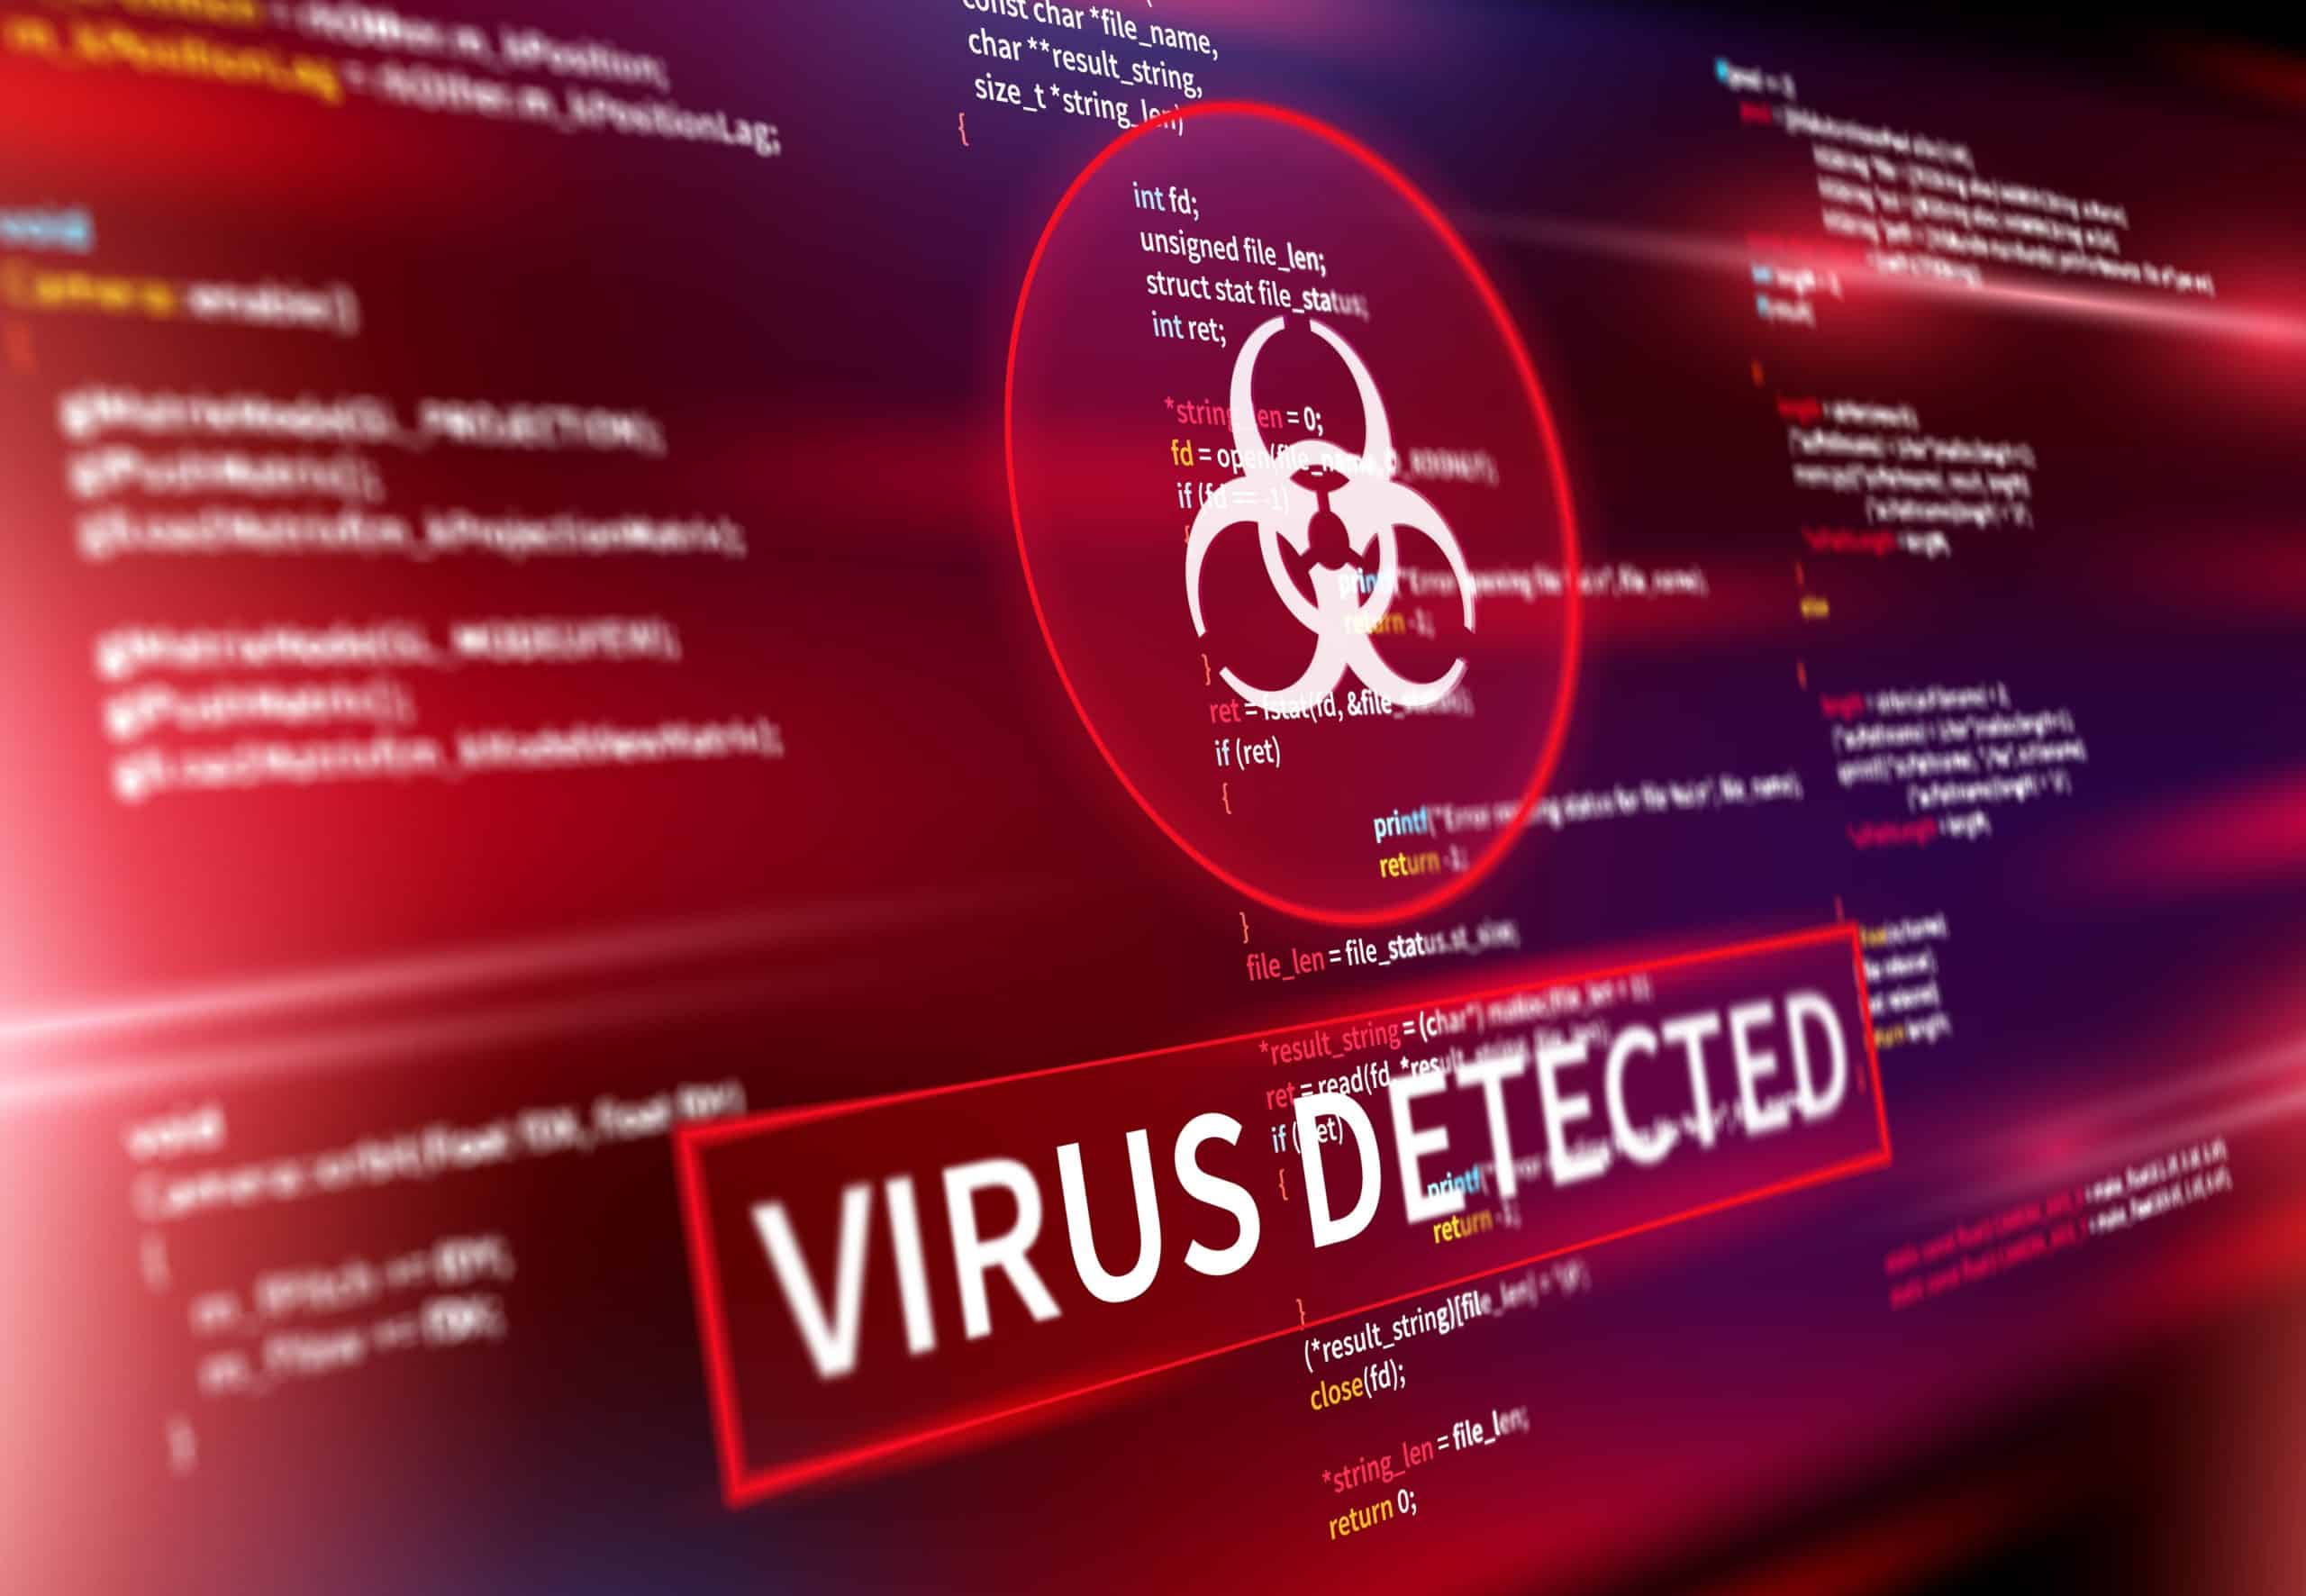 Virus detected warning alert on computer screen